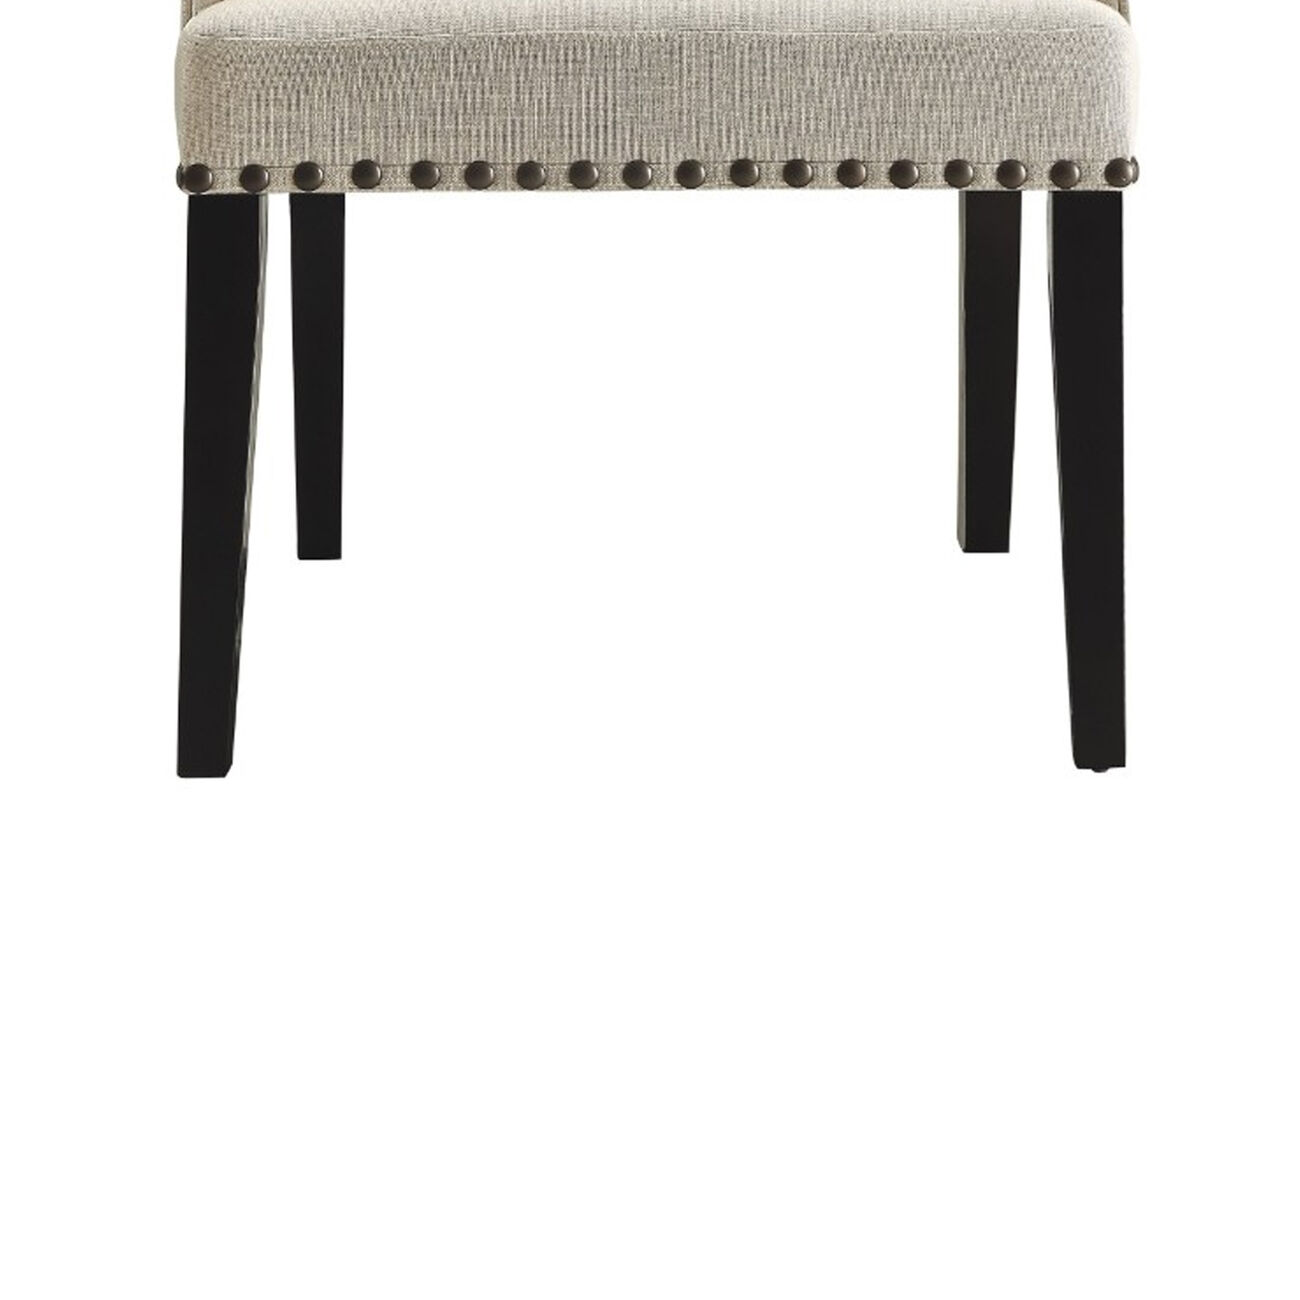 Diamond Tufted Upholstered Dining Chair, Cream & Smokey Black